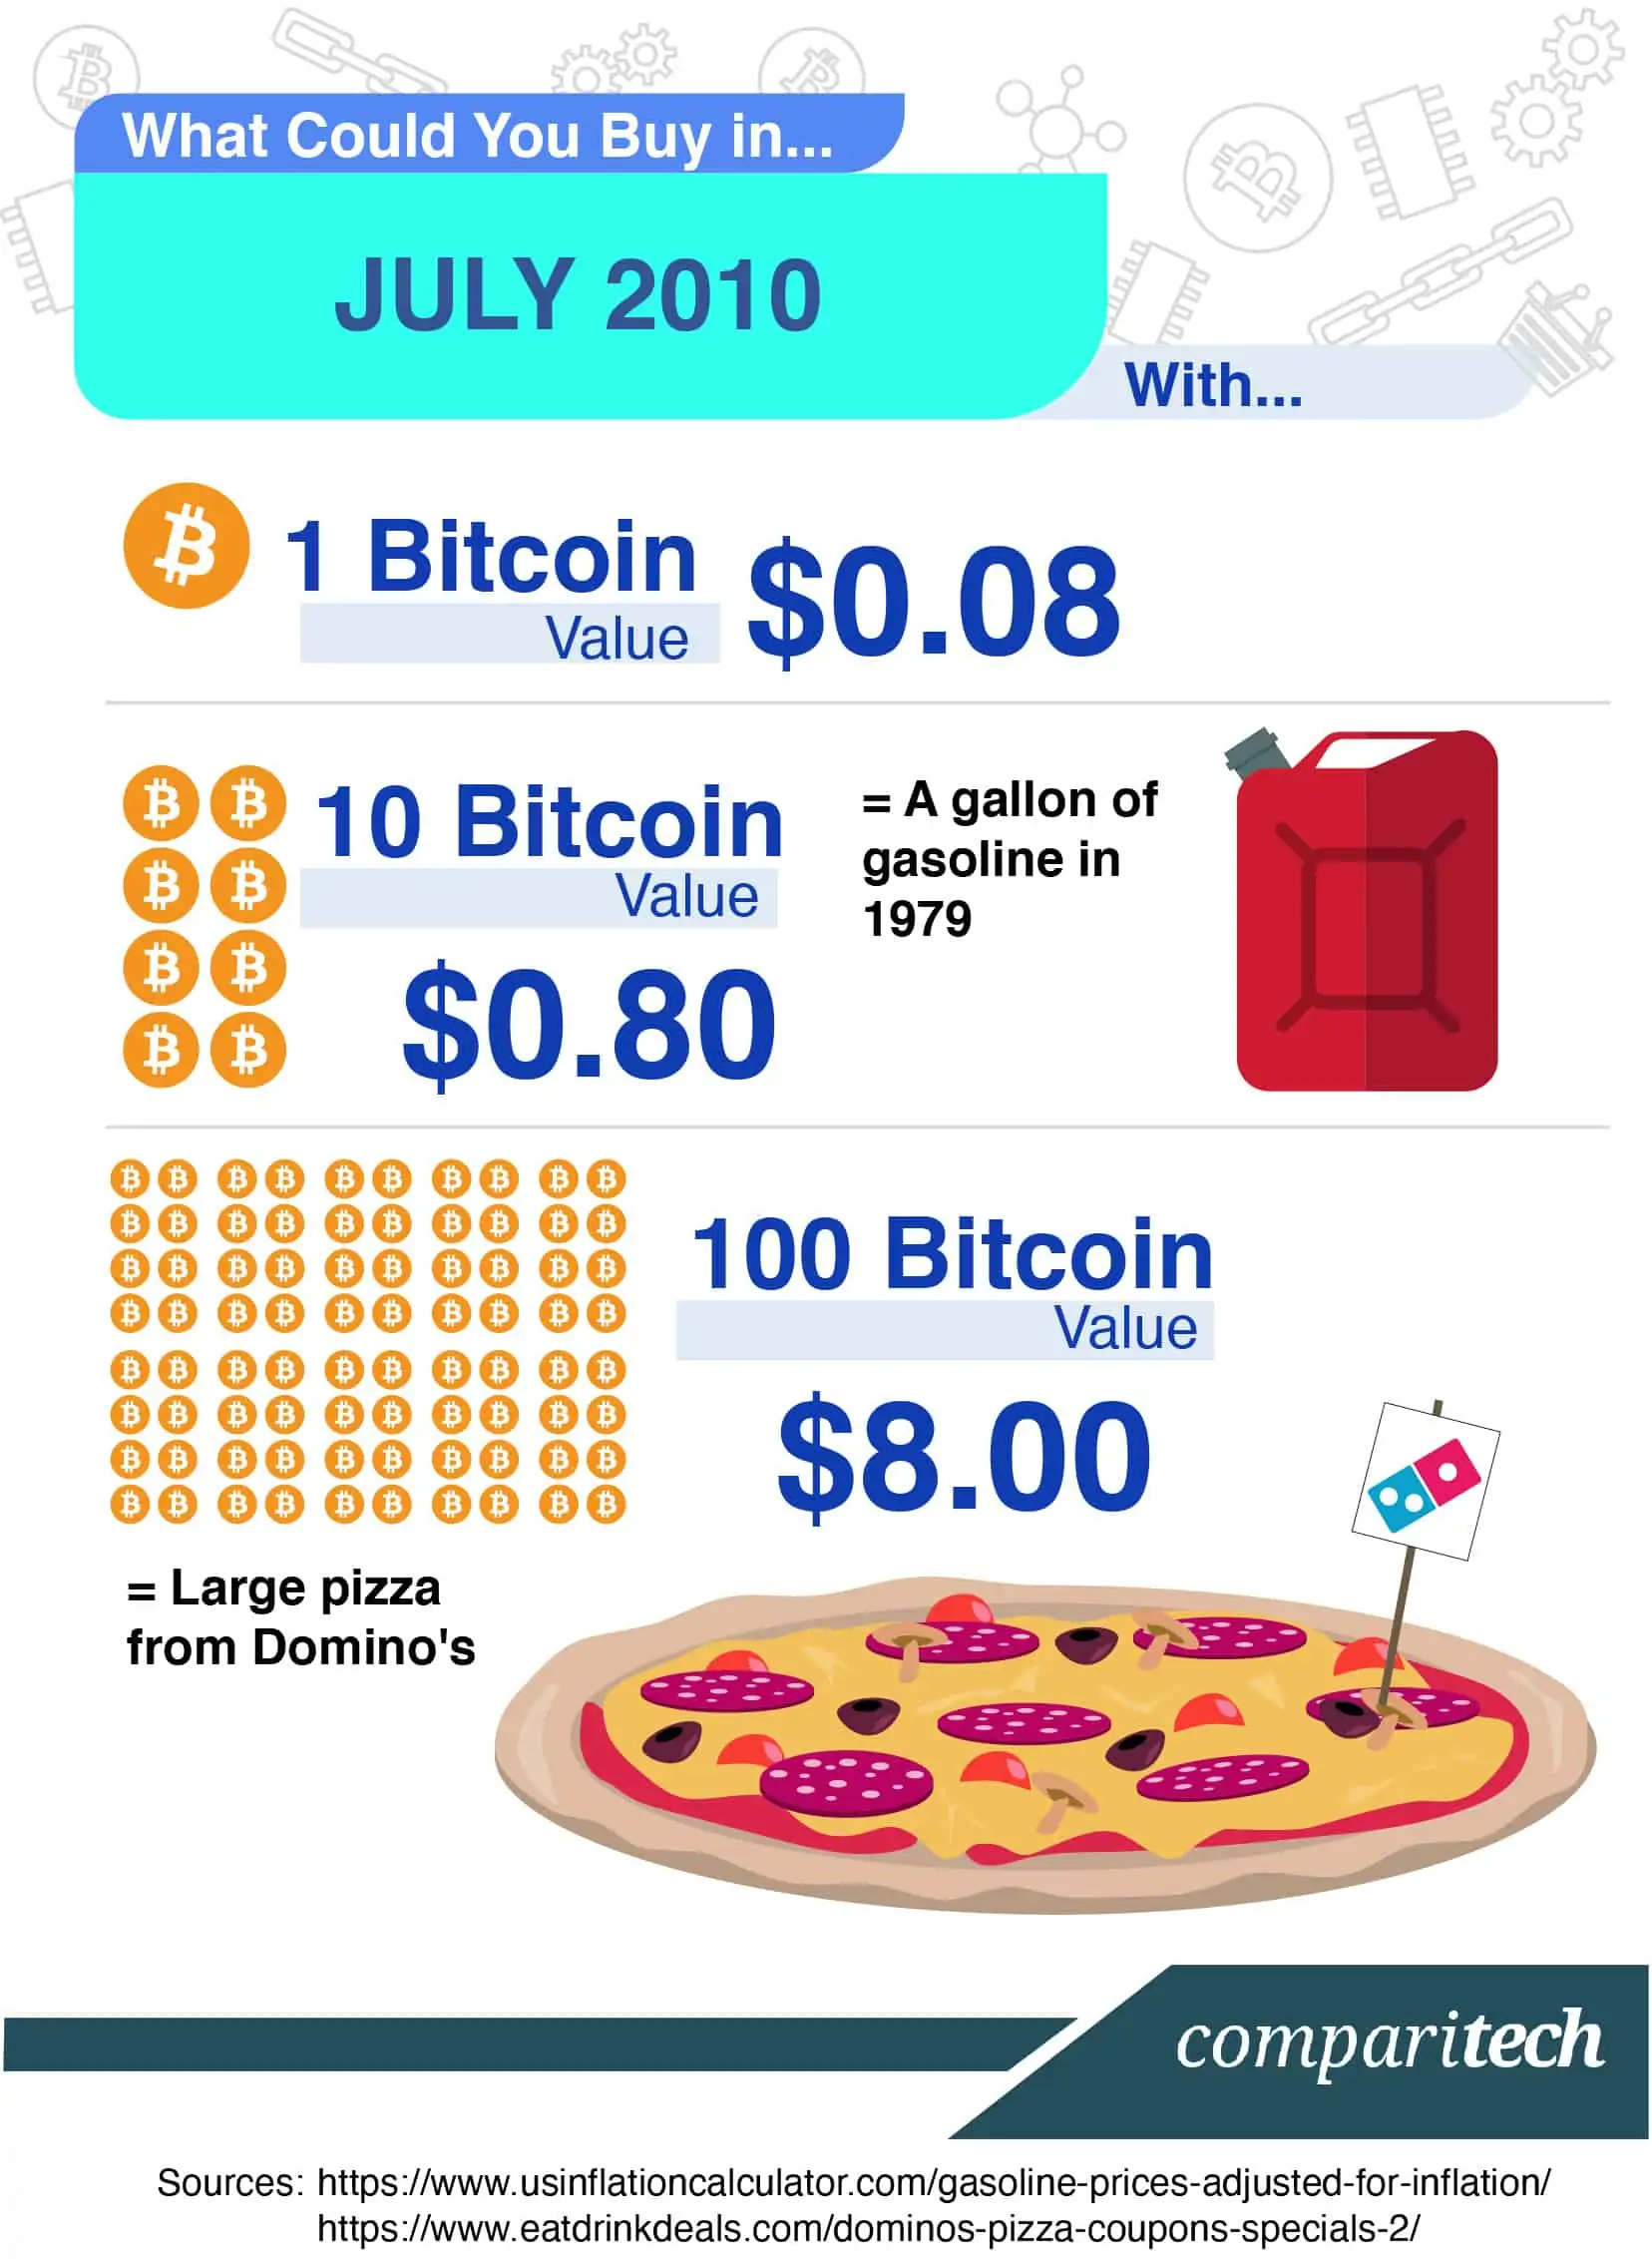 Bitcoin Price in 2010